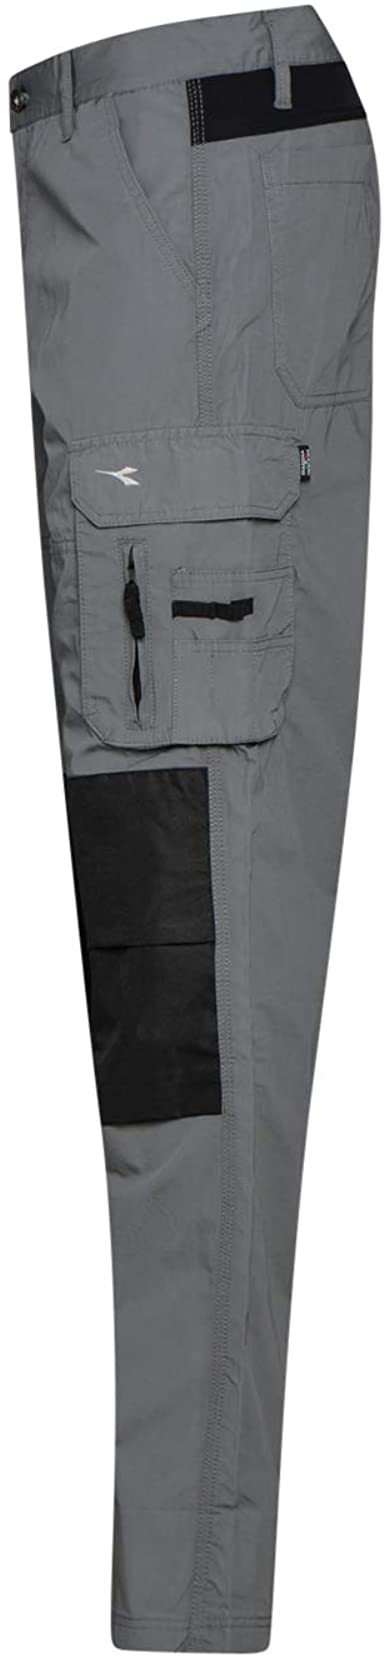 utility diadora - work trousers win perform. iso 13688:2013 for man (eu xl)